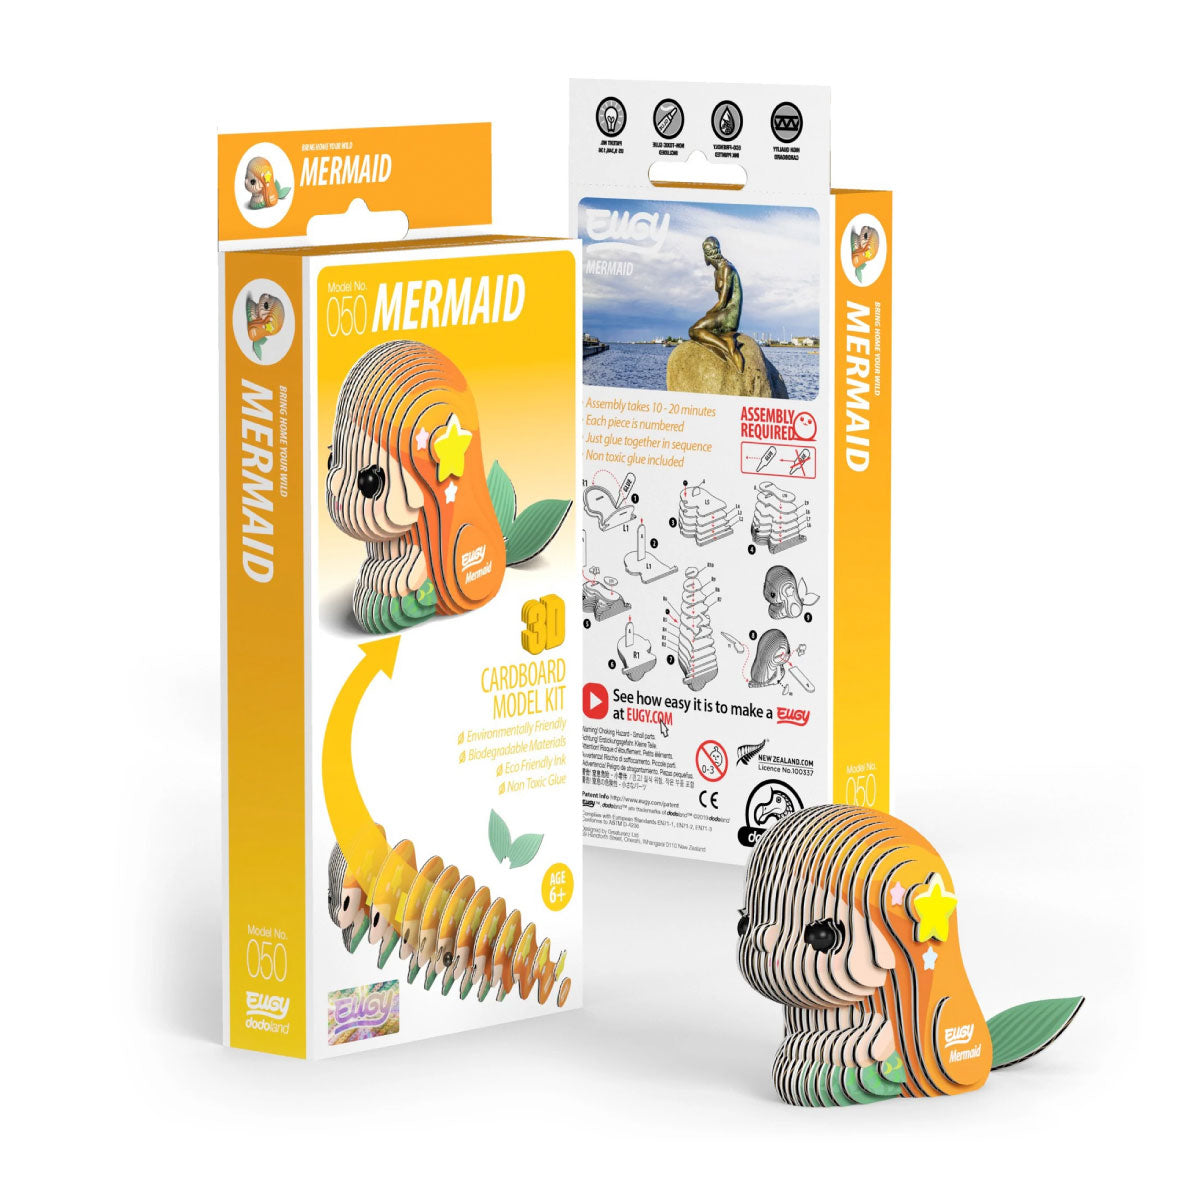 Eugy Mermaid 3-D Cardboard Model Kit